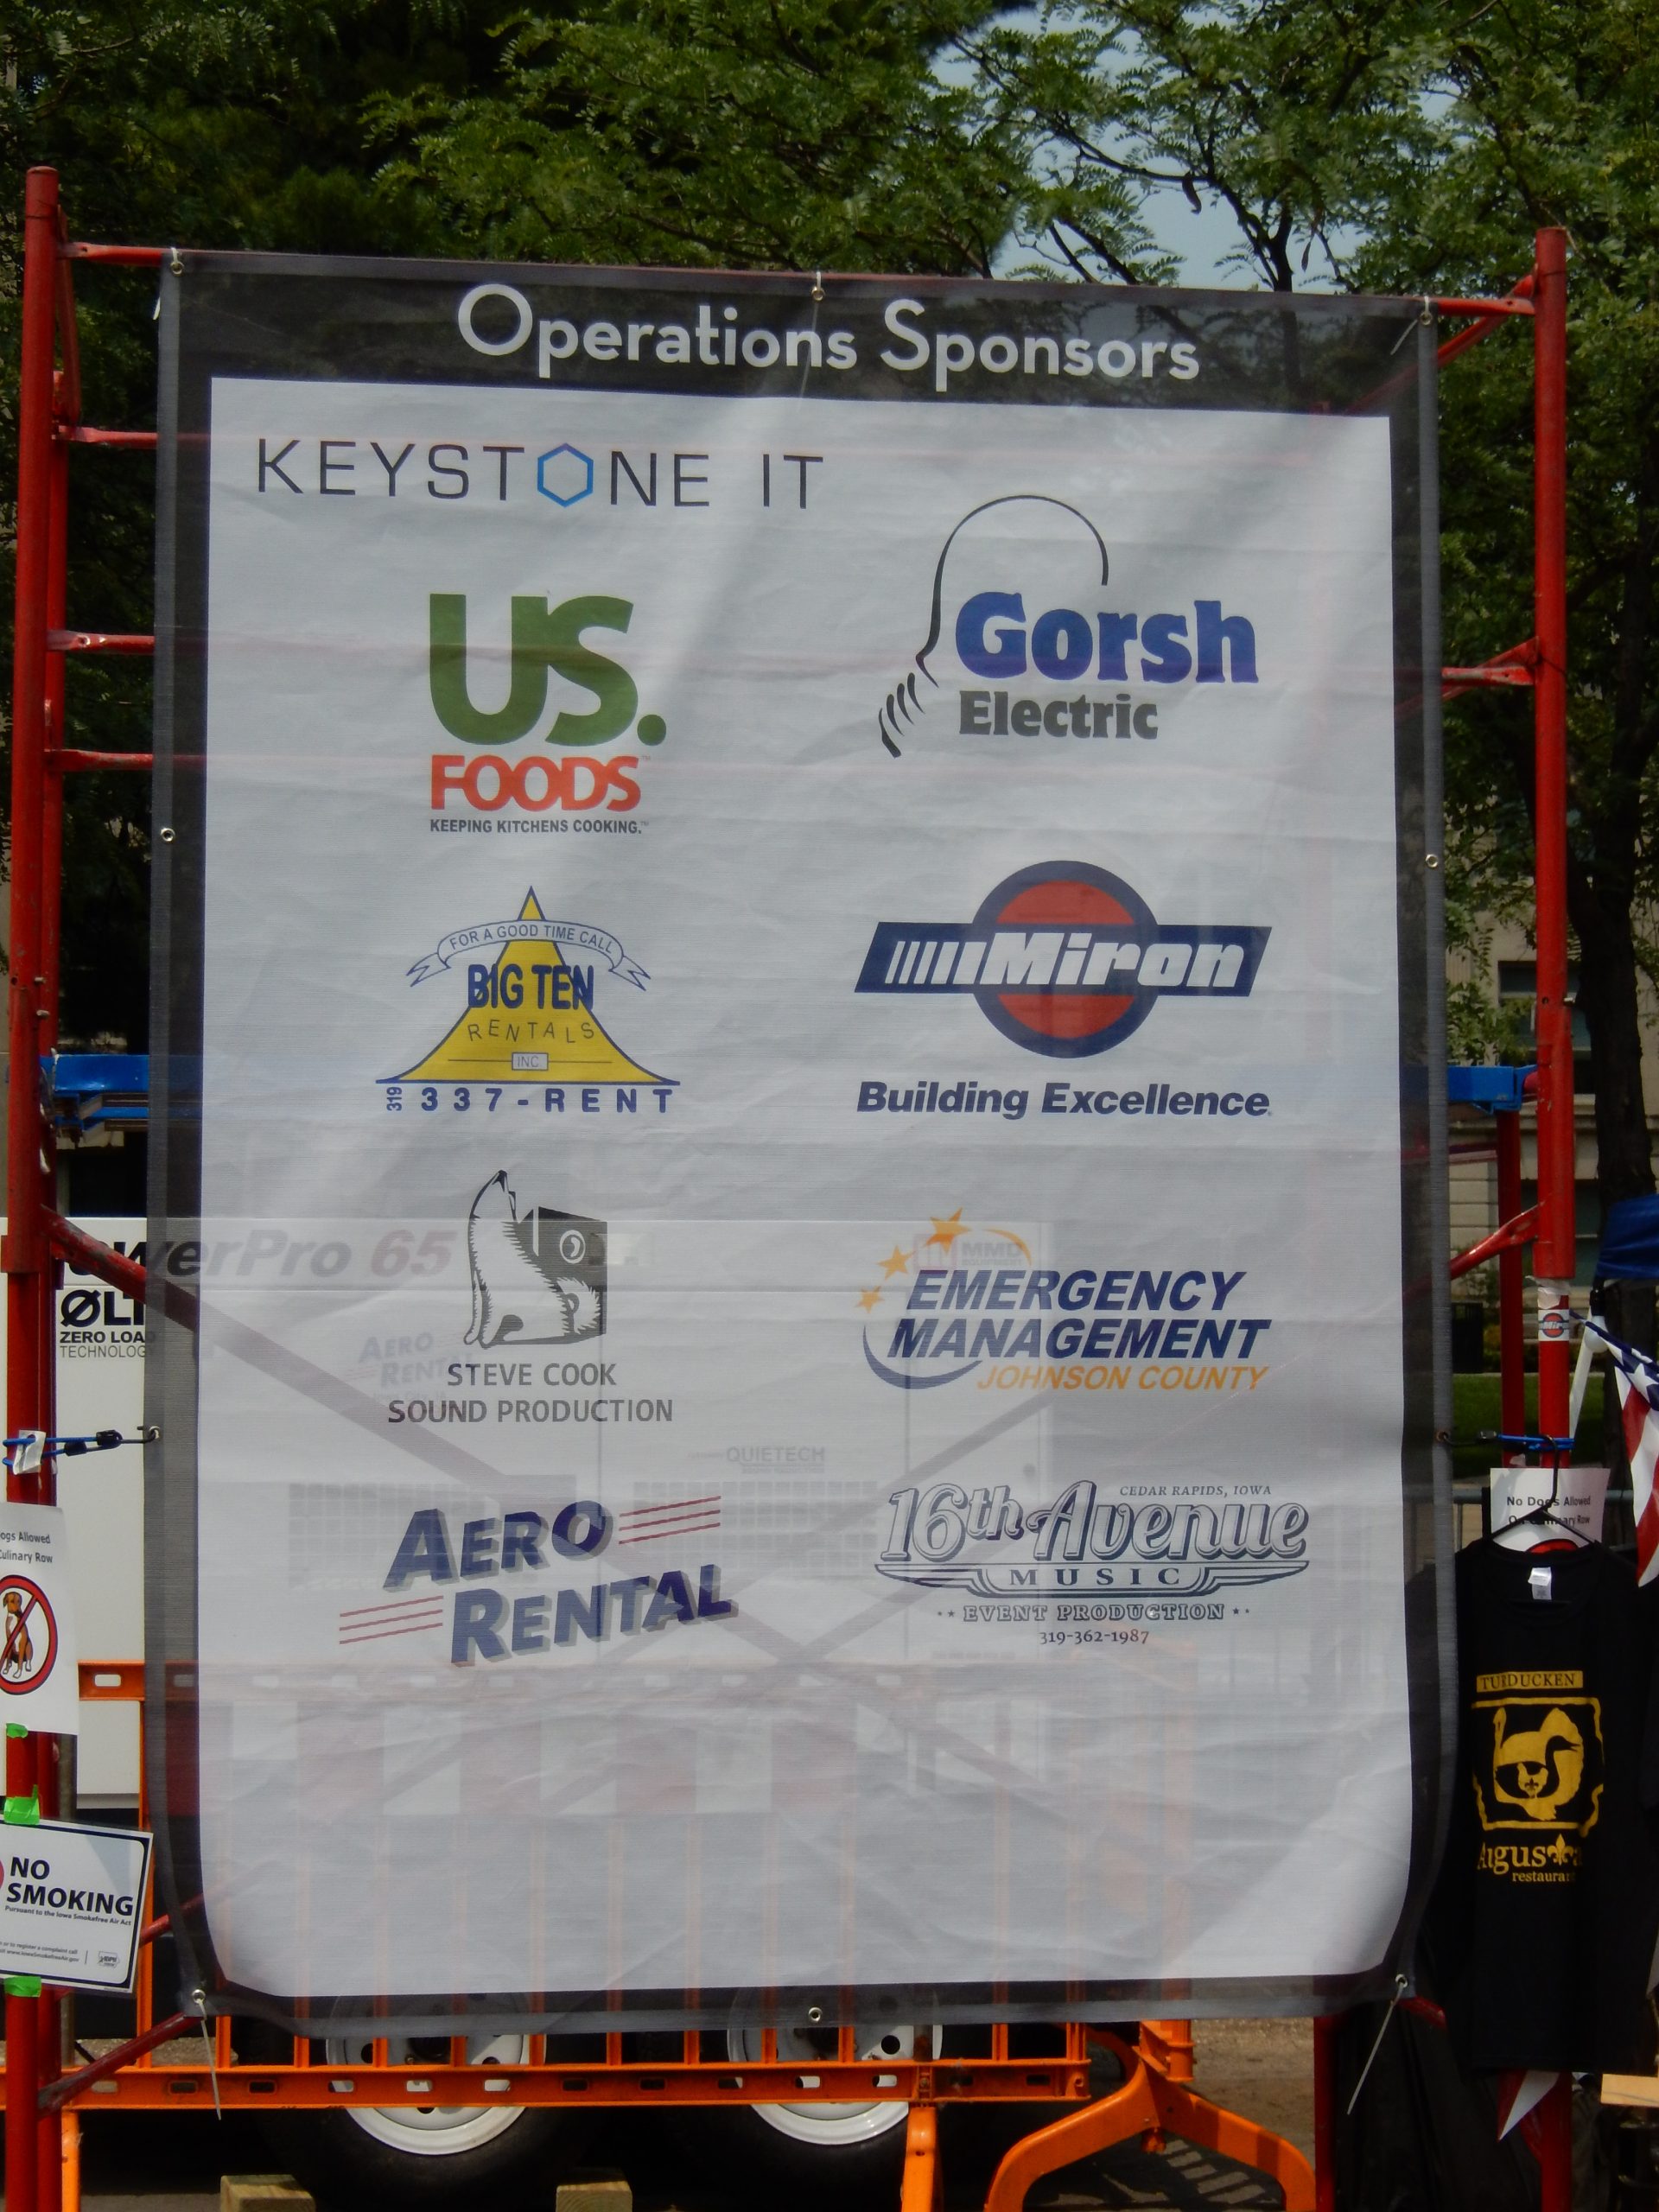 List of operations sponsors